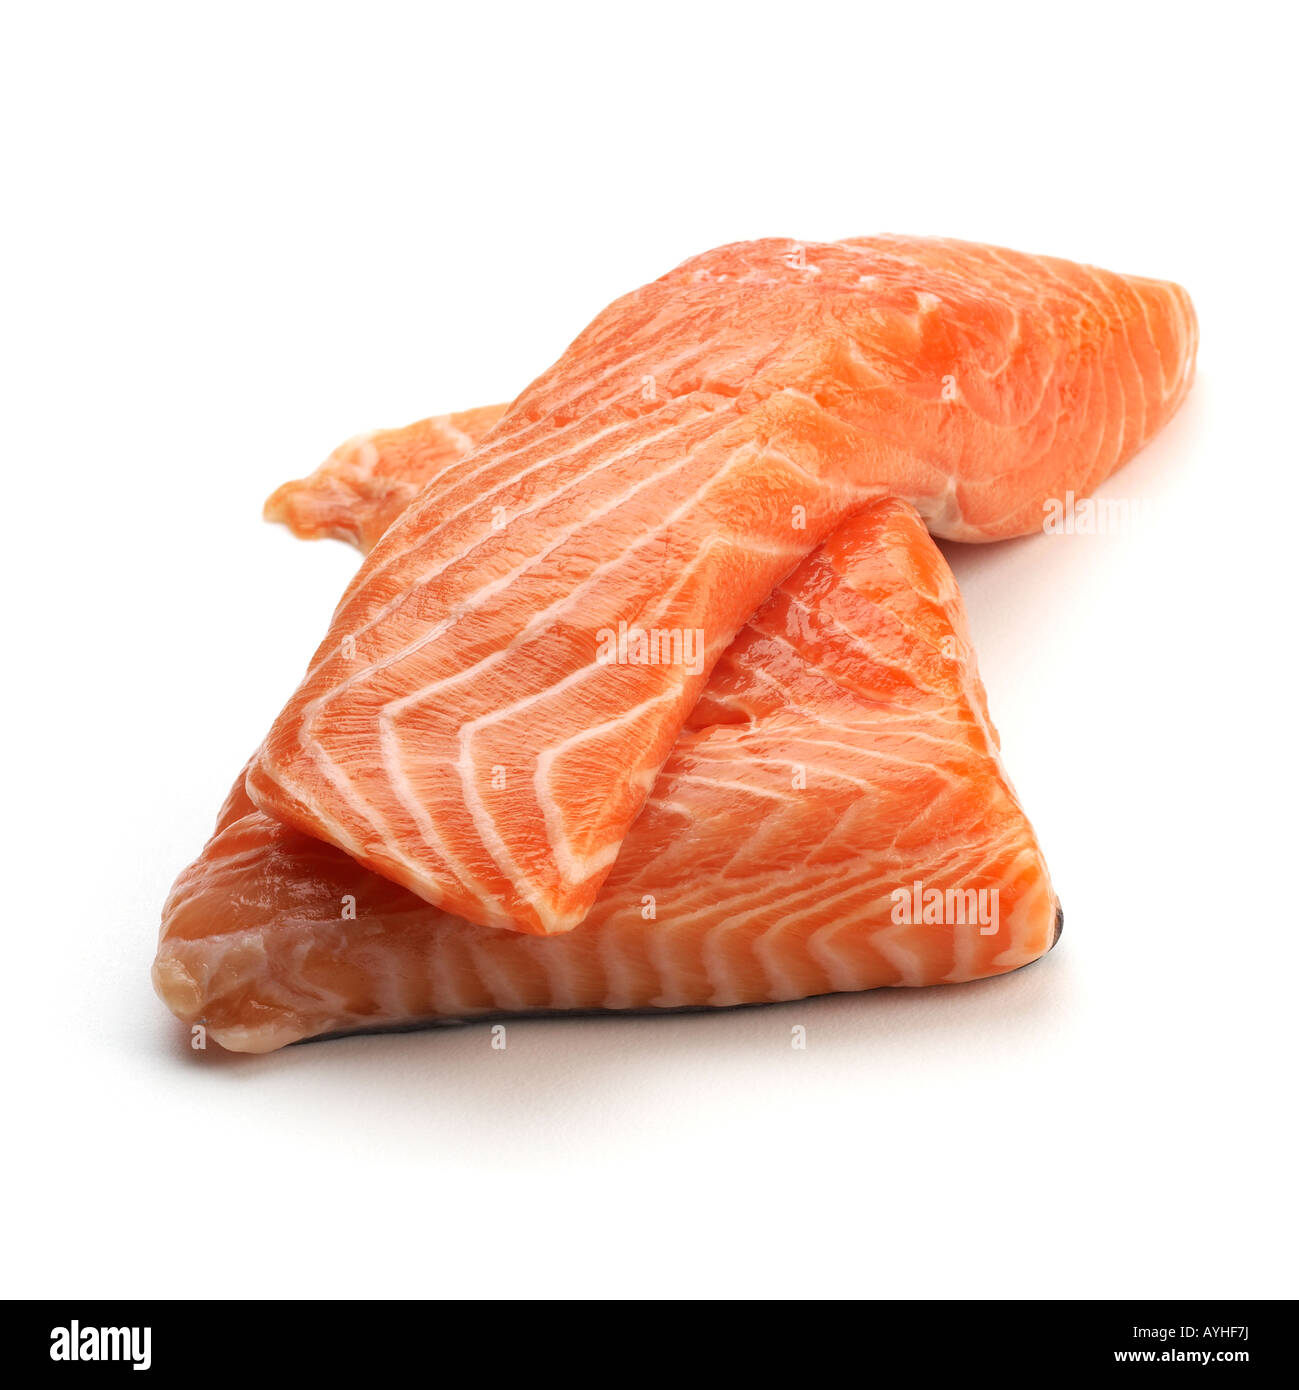 Salmon fillets on white background Stock Photo